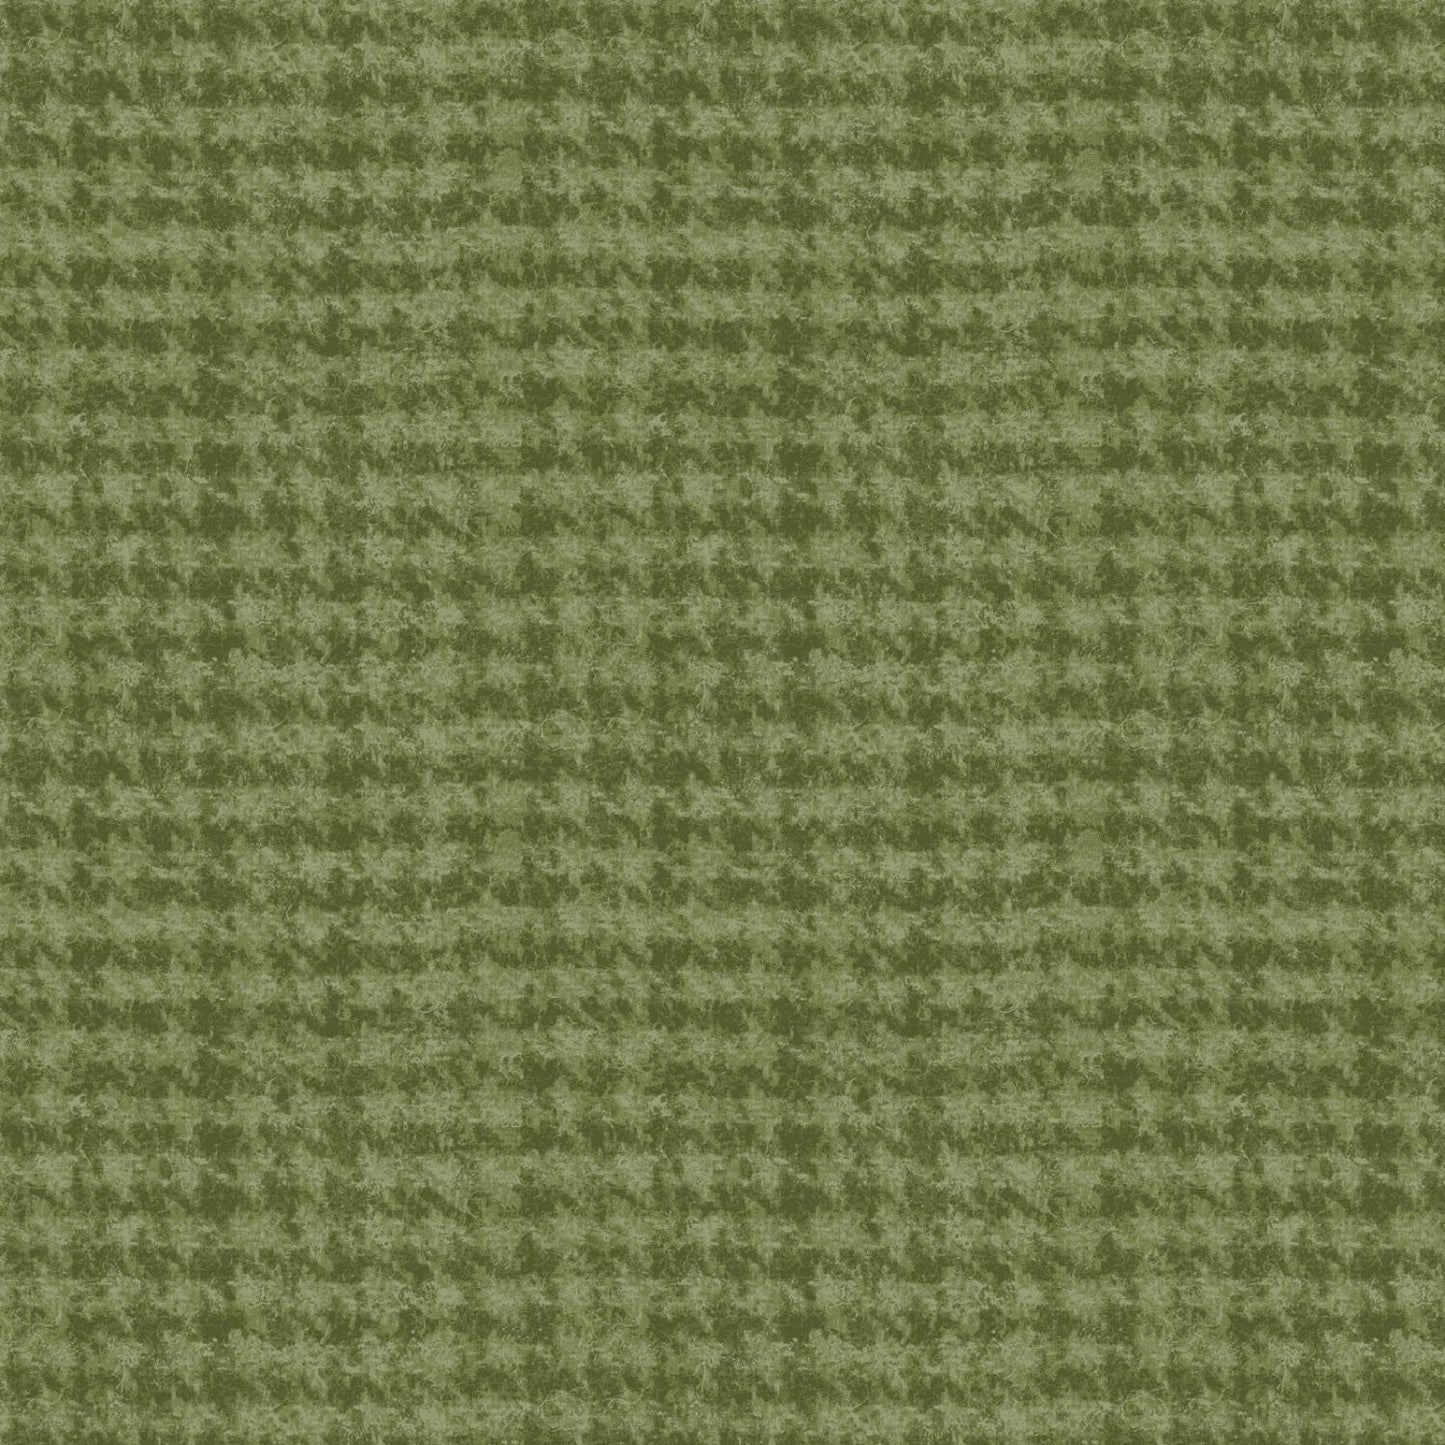 Woolies Flannel -- Houndstooth, Light Green  - Maywood Studio